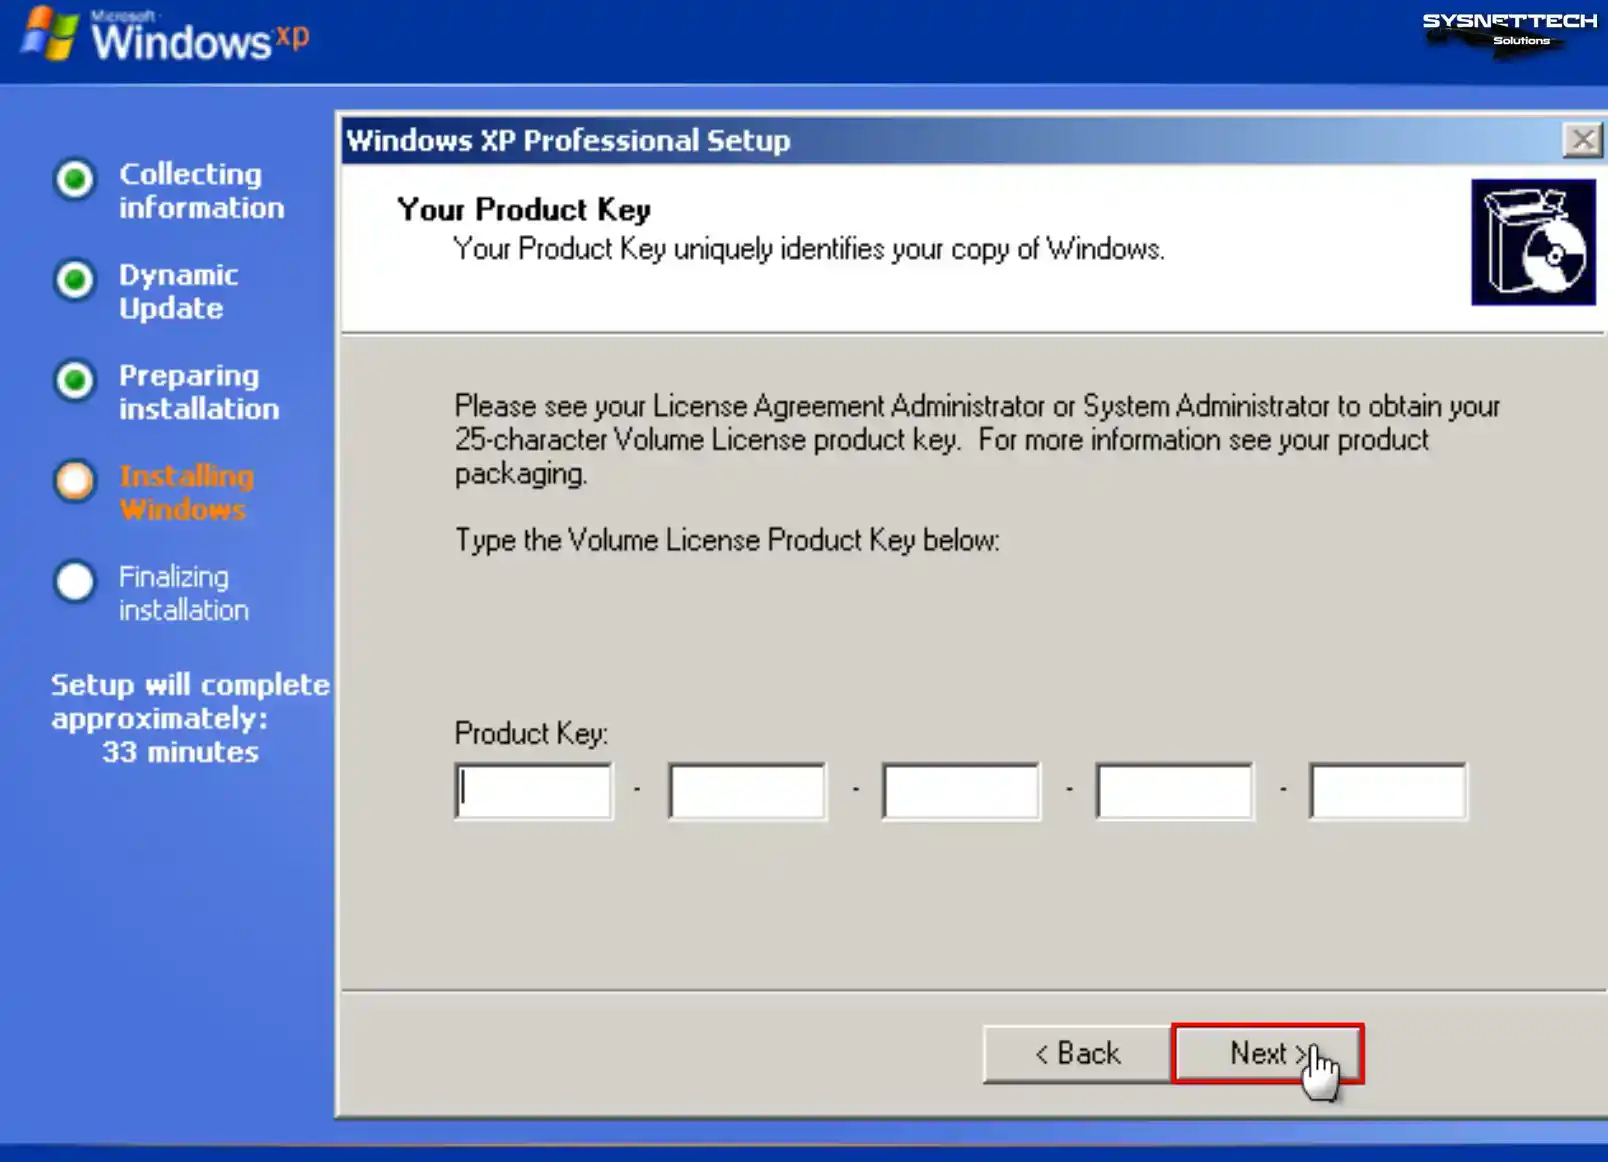 Entering the Windows XP Product Key